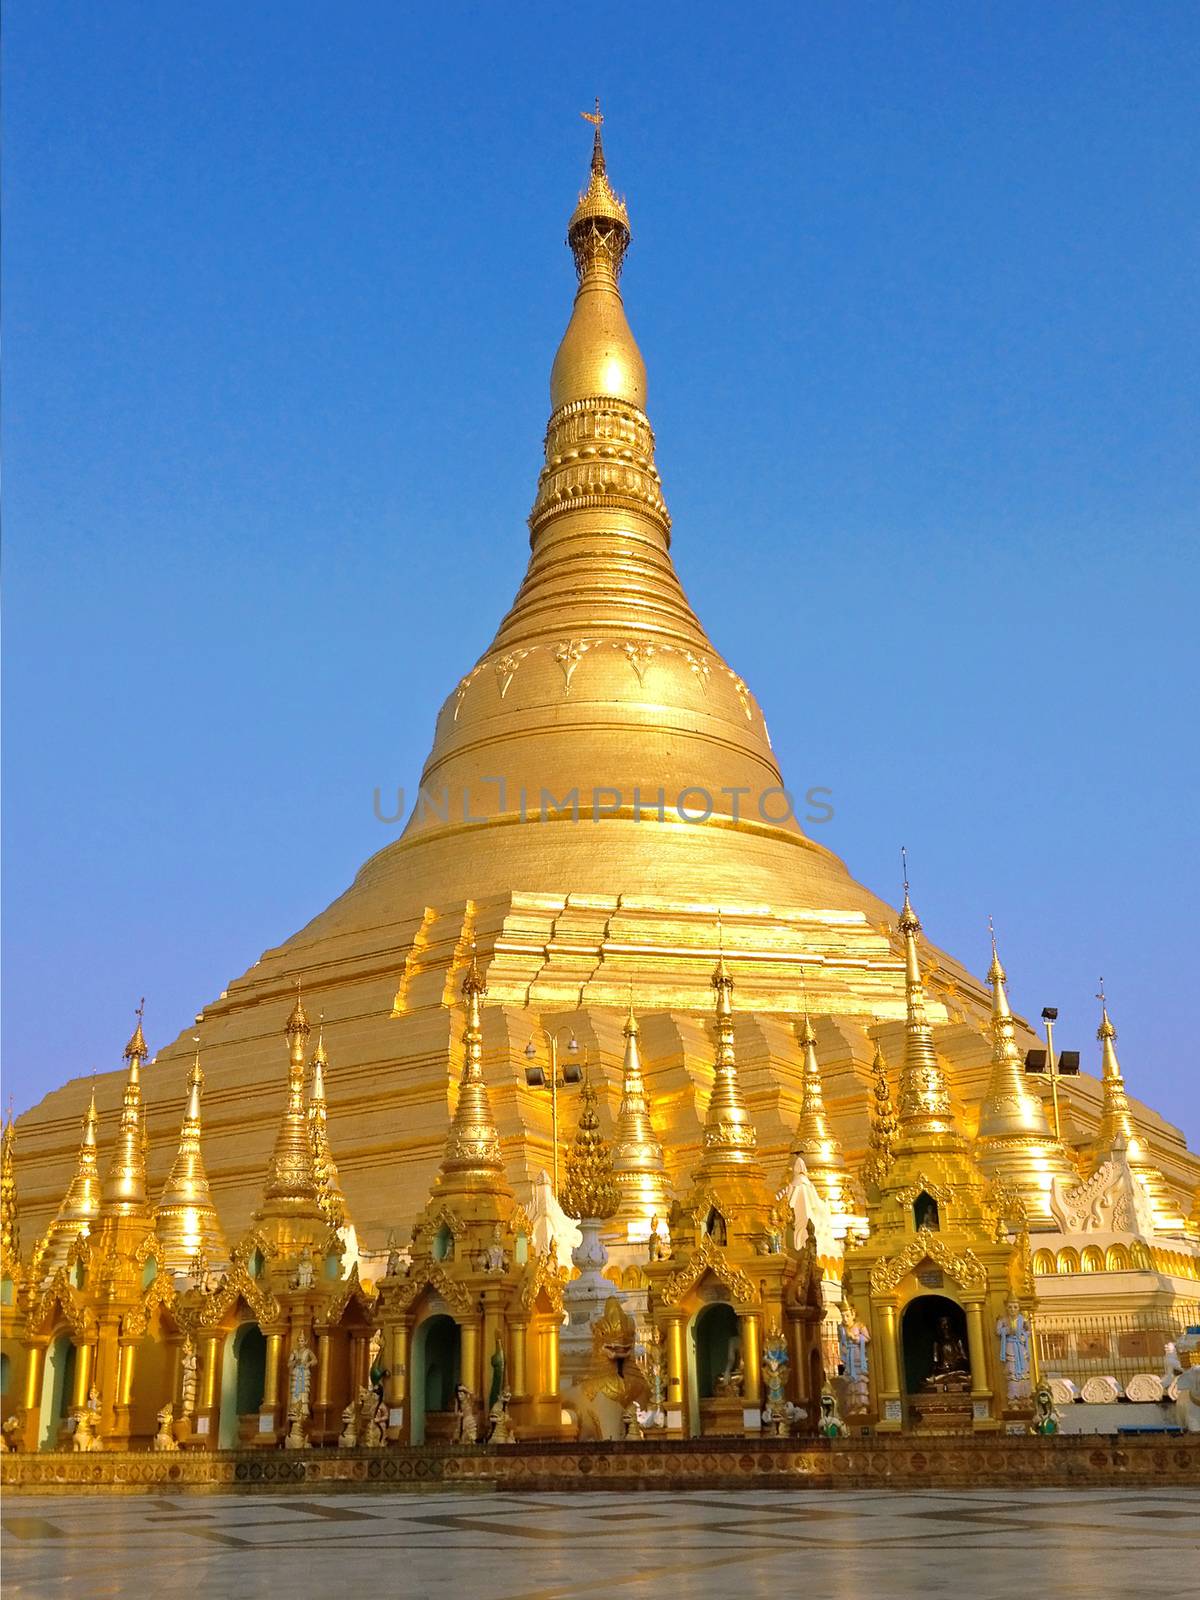 Shwedagon pagoda ,the famous sacred place and tourist attraction landmark in Yangon, Myanmar